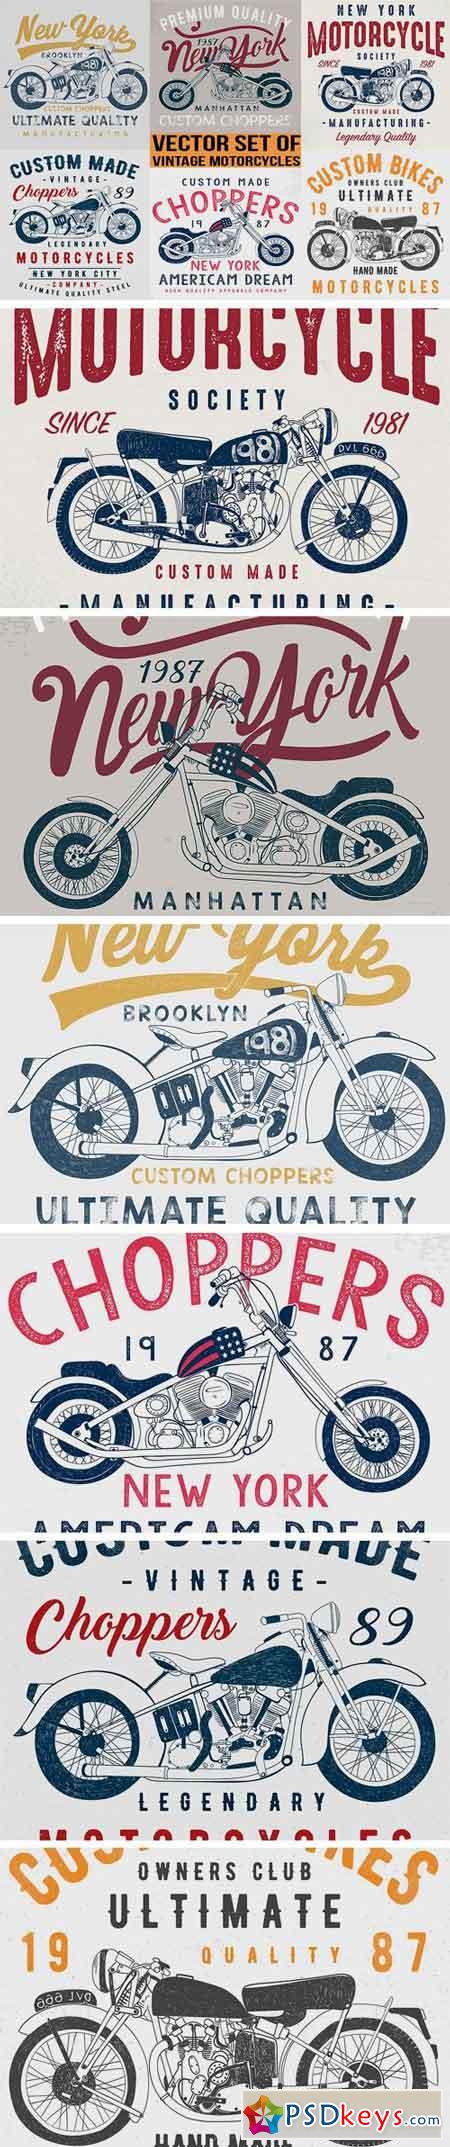 Vintage Motorcycle Illustrations 1185795